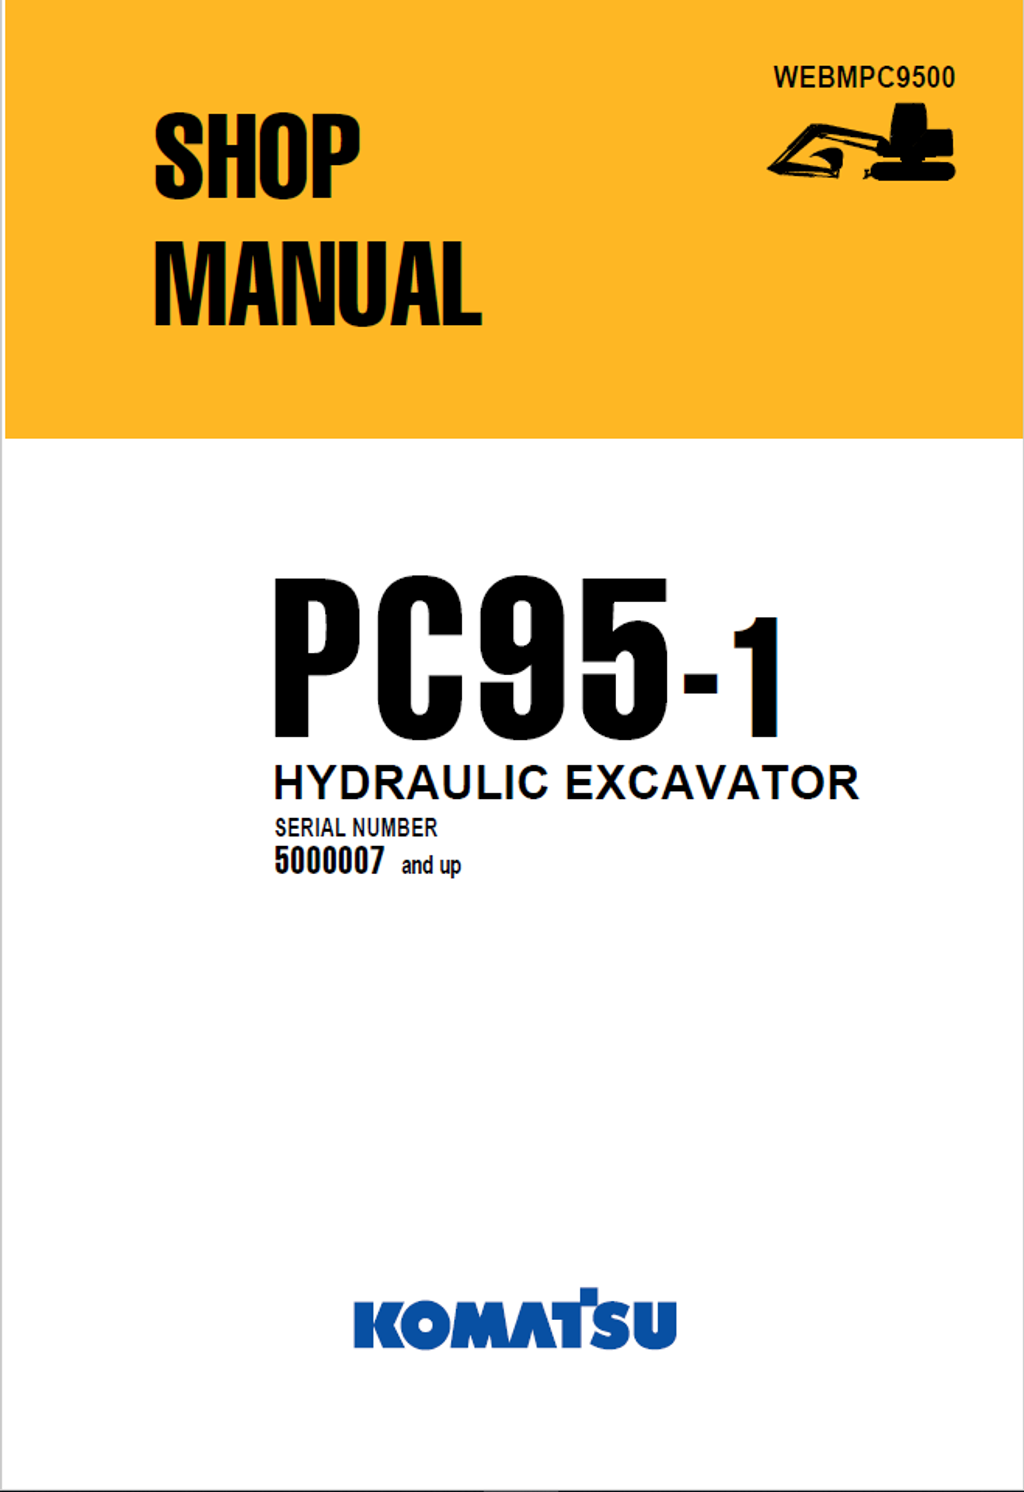 Komatsu Hydraulic Excavator Shop Manual PC95-1 5000007 and up WEBMPC9500  English – Electronic Parts Catalogue